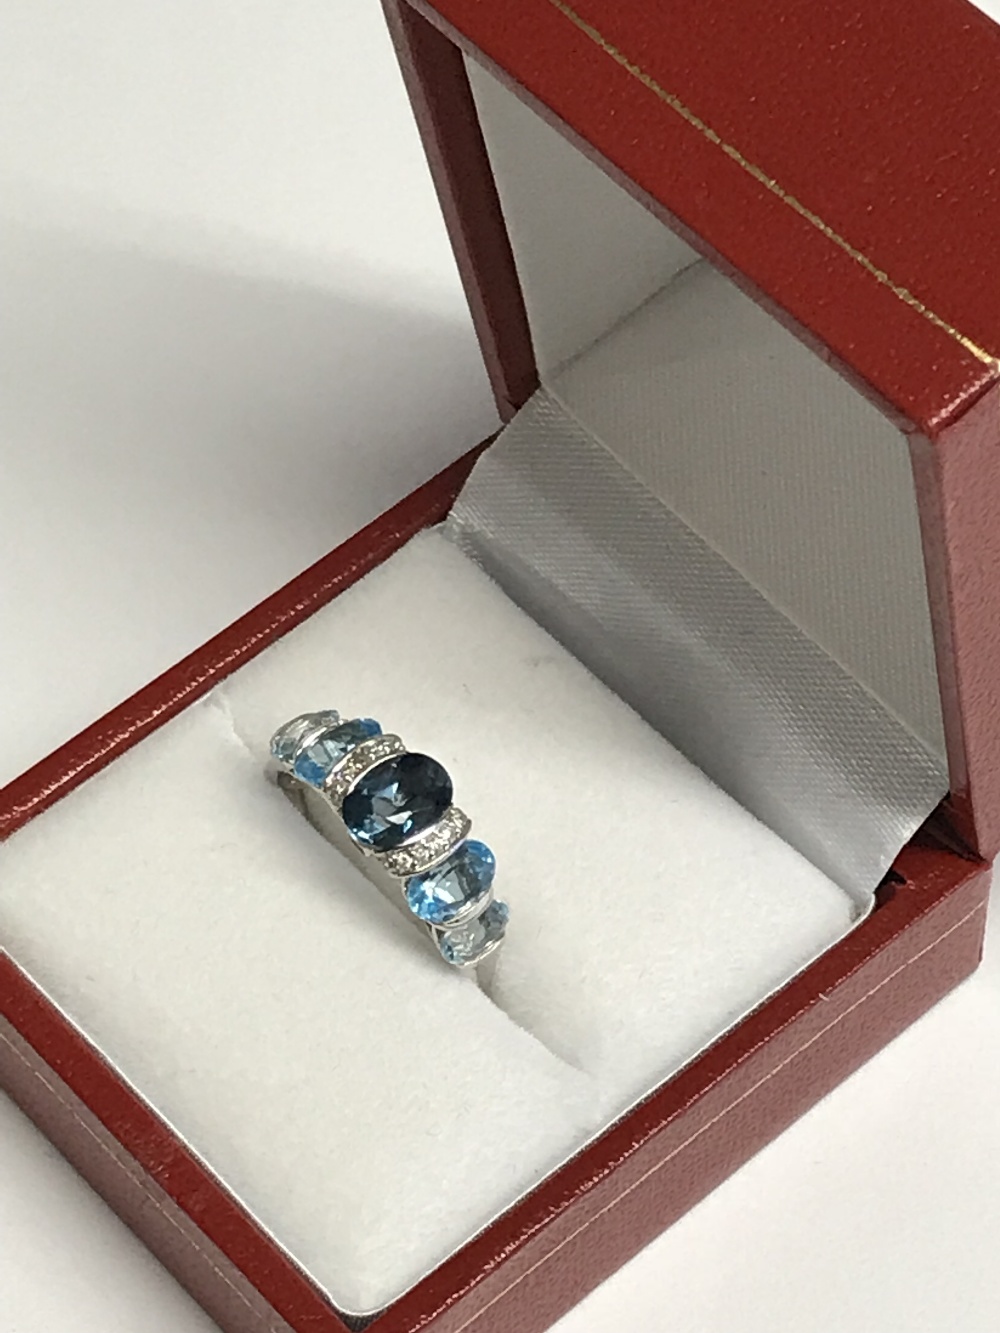 14 carat white gold, blue topaz & diamond ring - Image 2 of 2